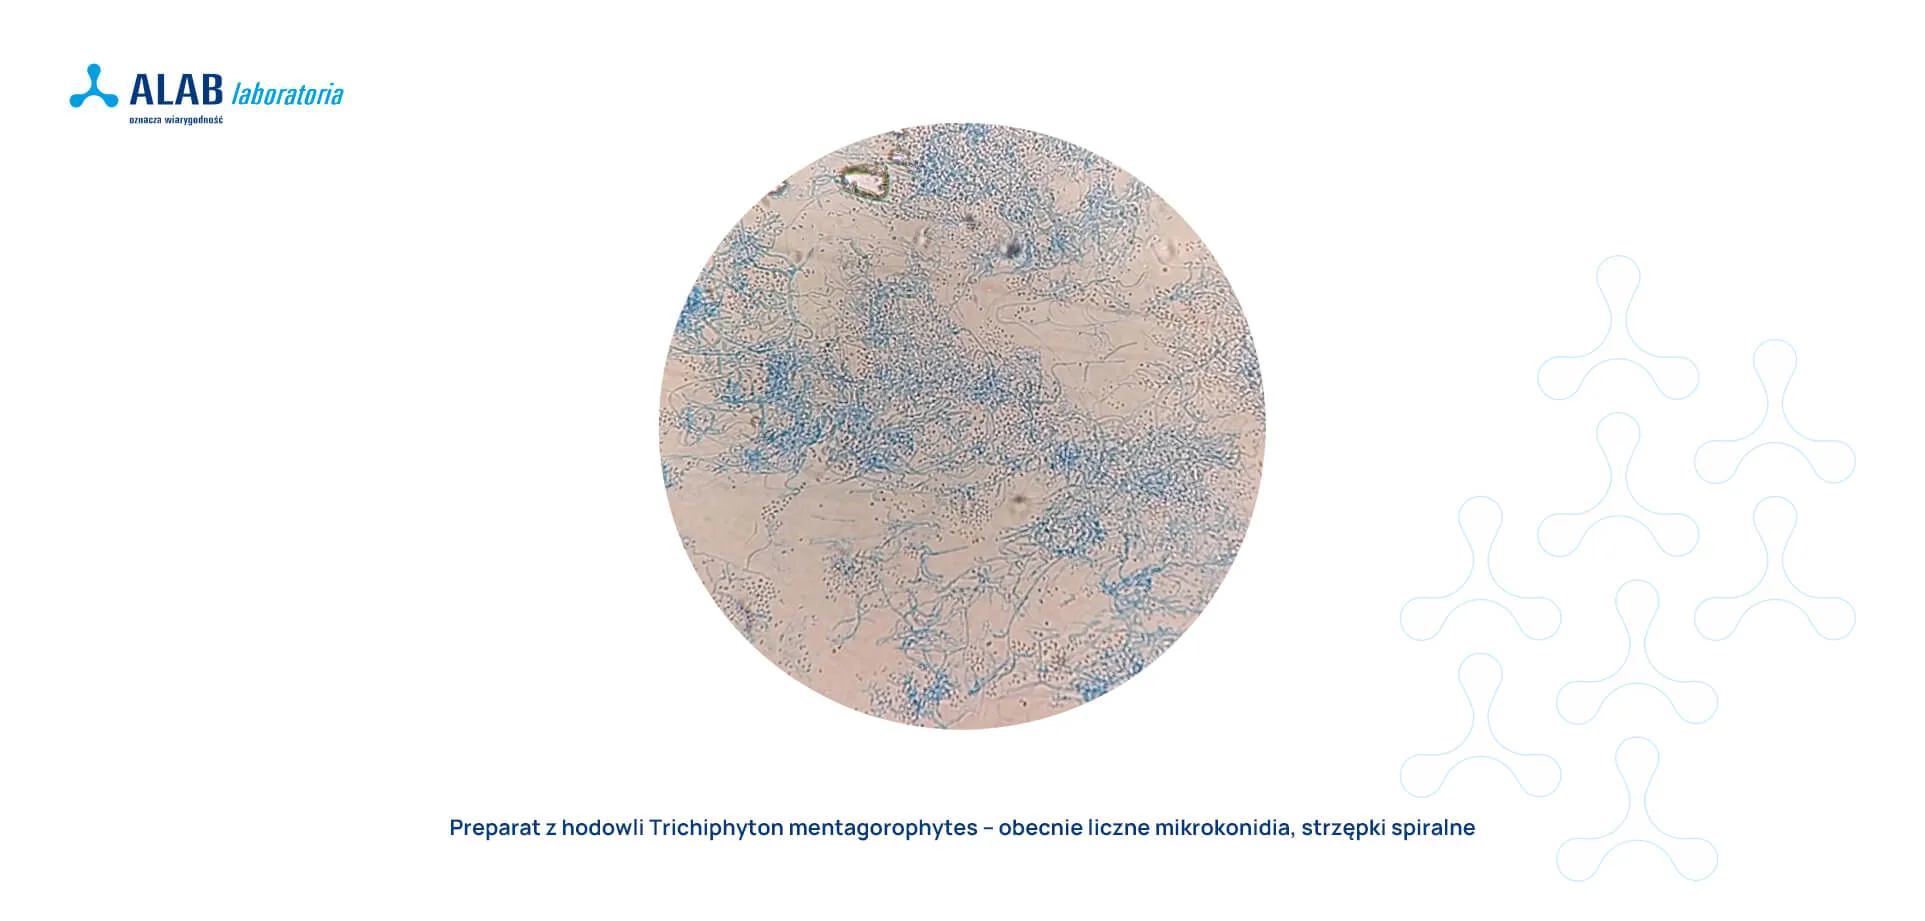 grzyb trichiphyton mentagorophytes pod mikroskopem